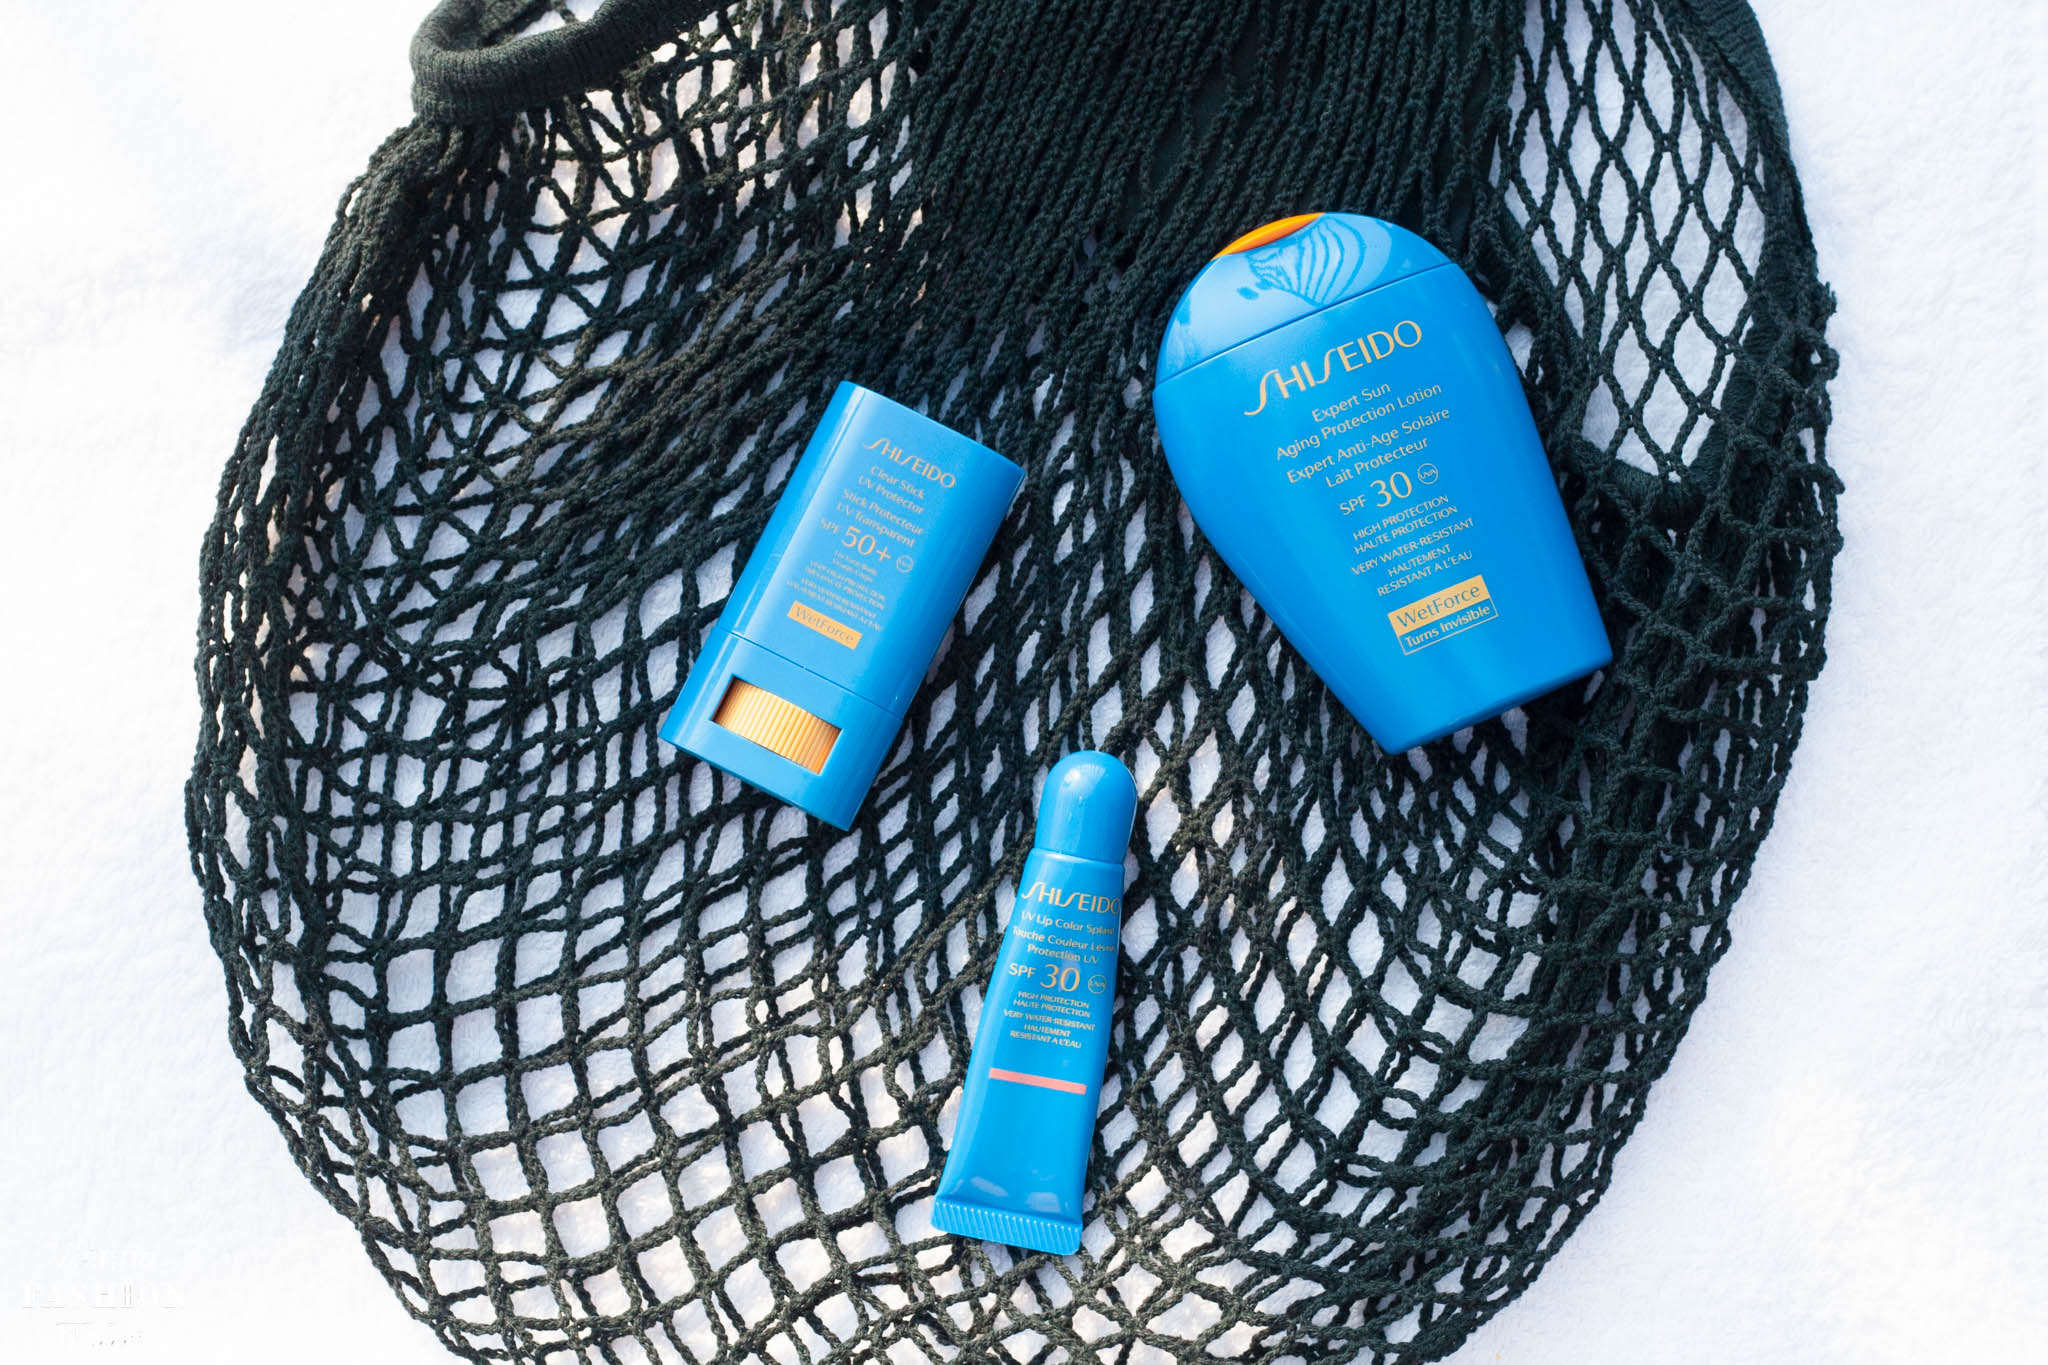 Sonnenpflege von Shiseido Tipps & Tricks Sonnenbrand